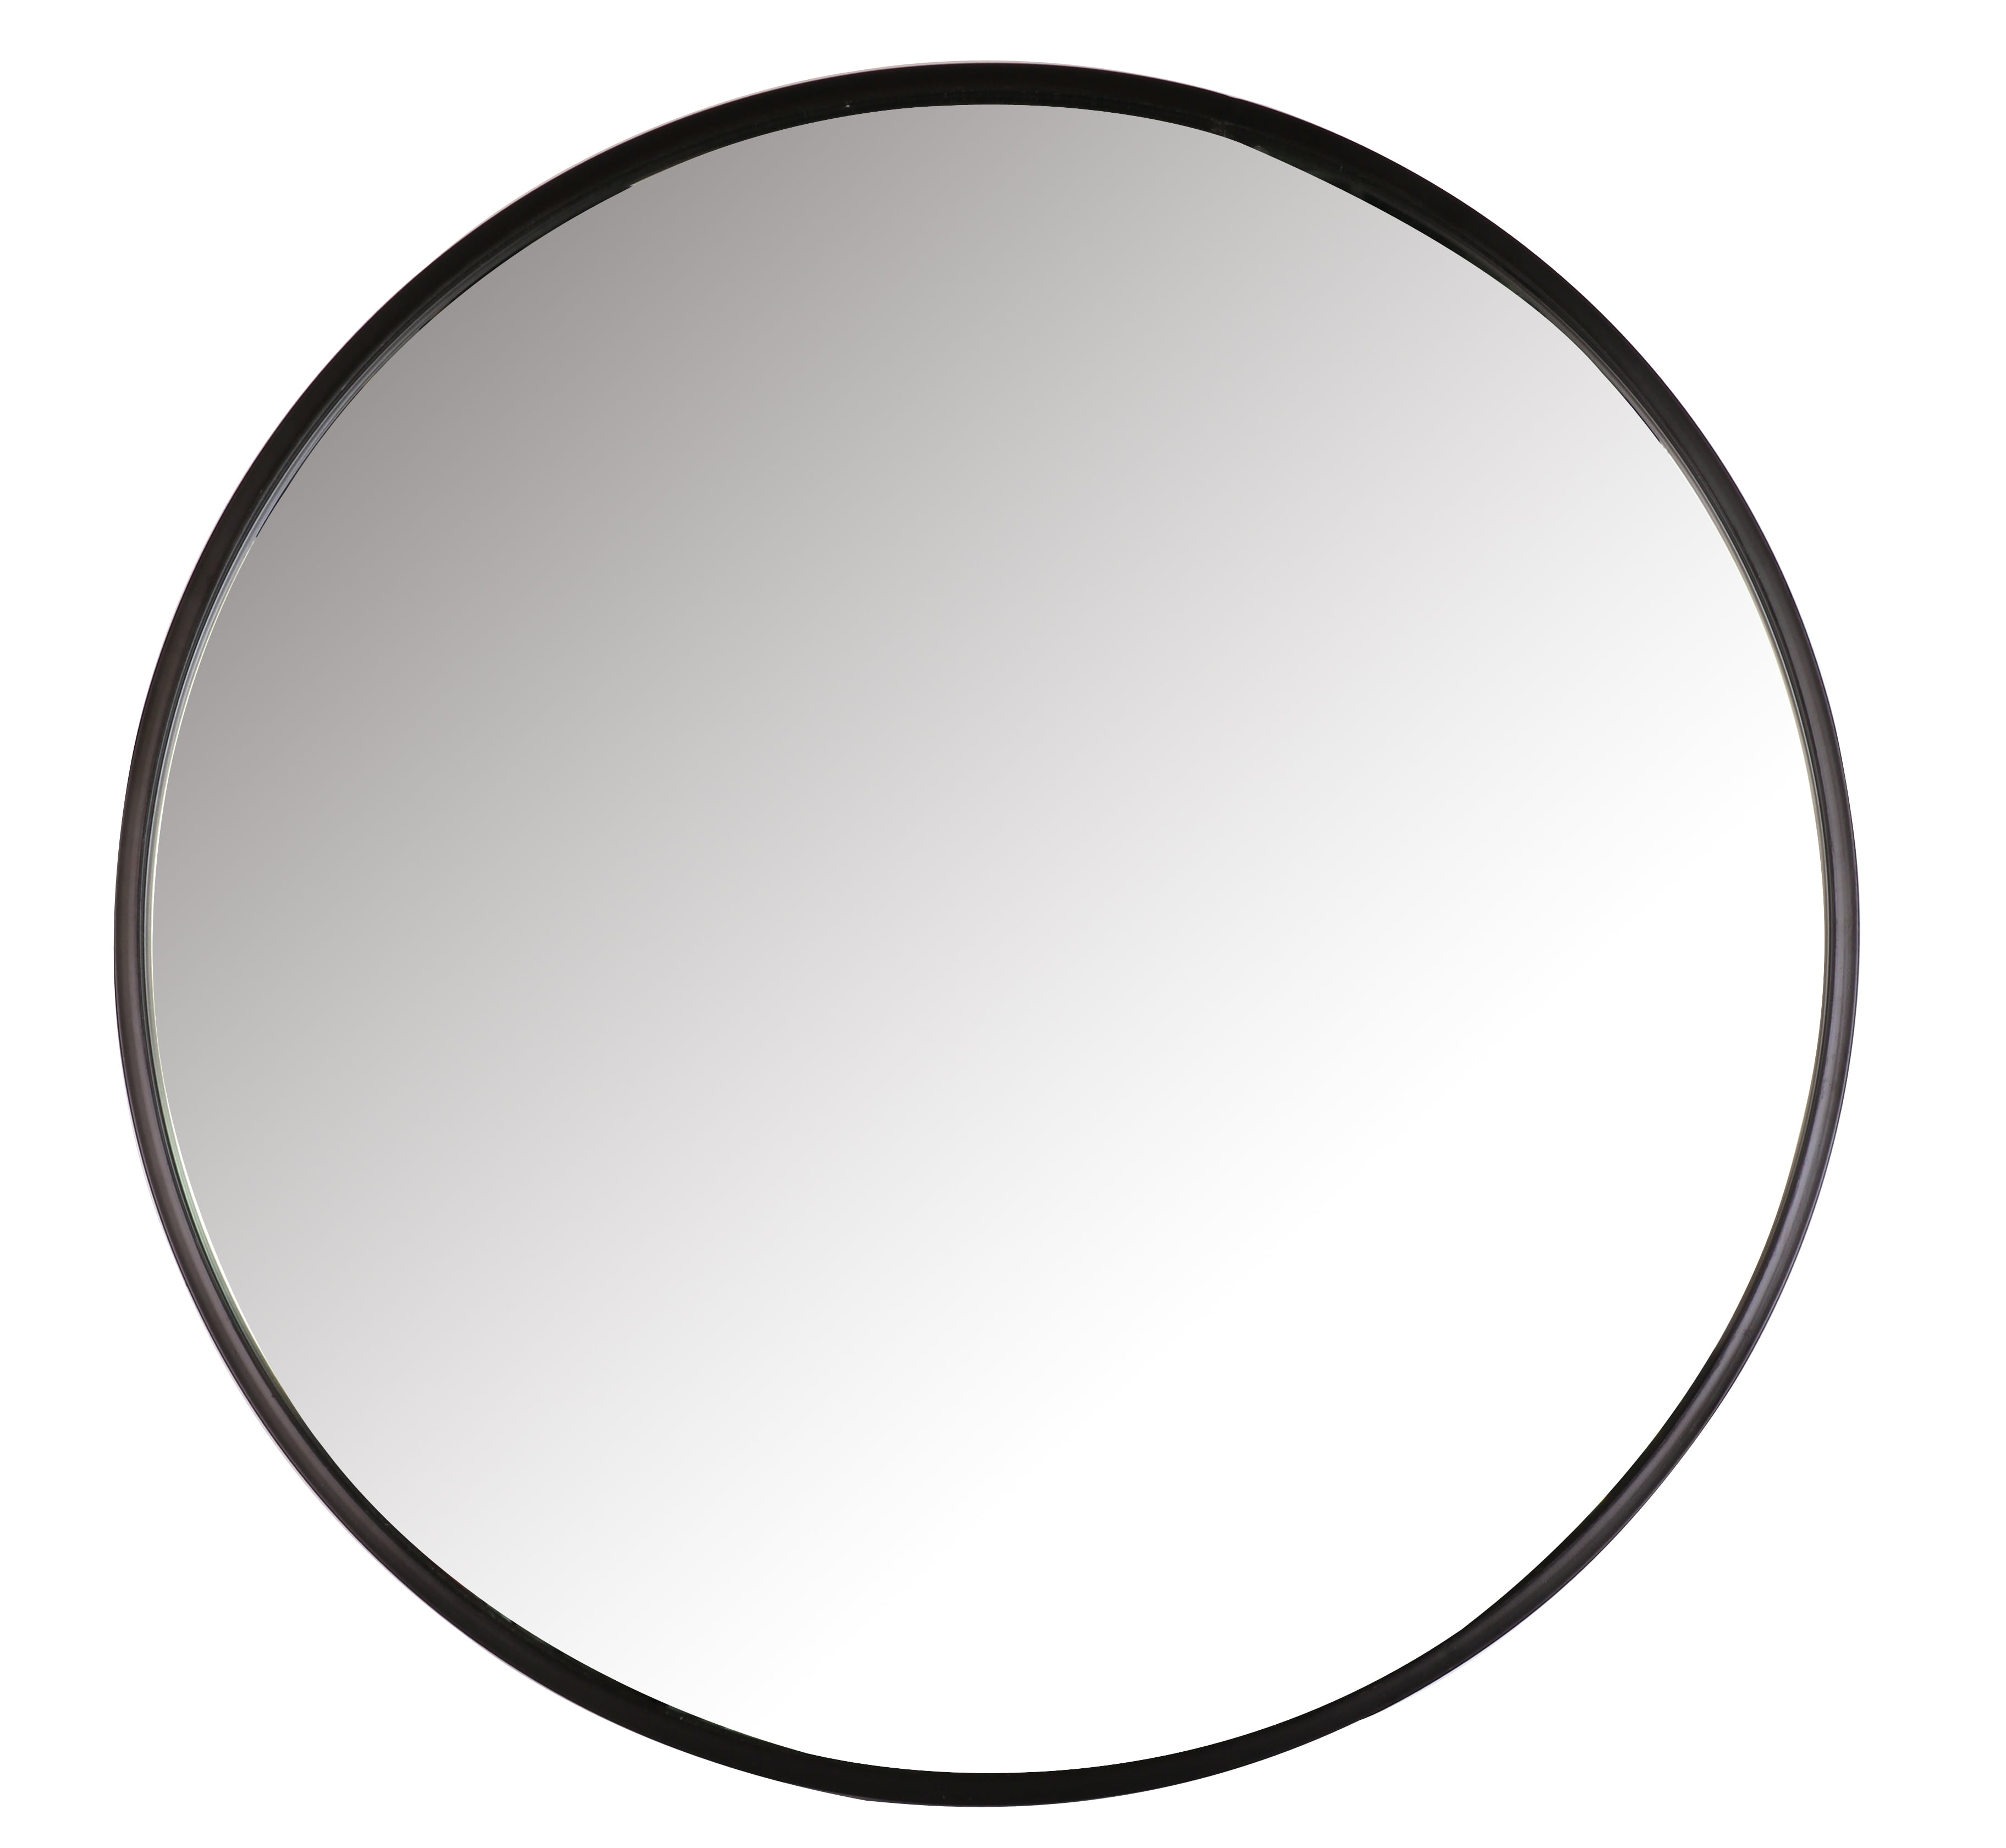 Mirrorize Ca 34 Dia Framed Plain, Round Metal Framed Wall Mirrors